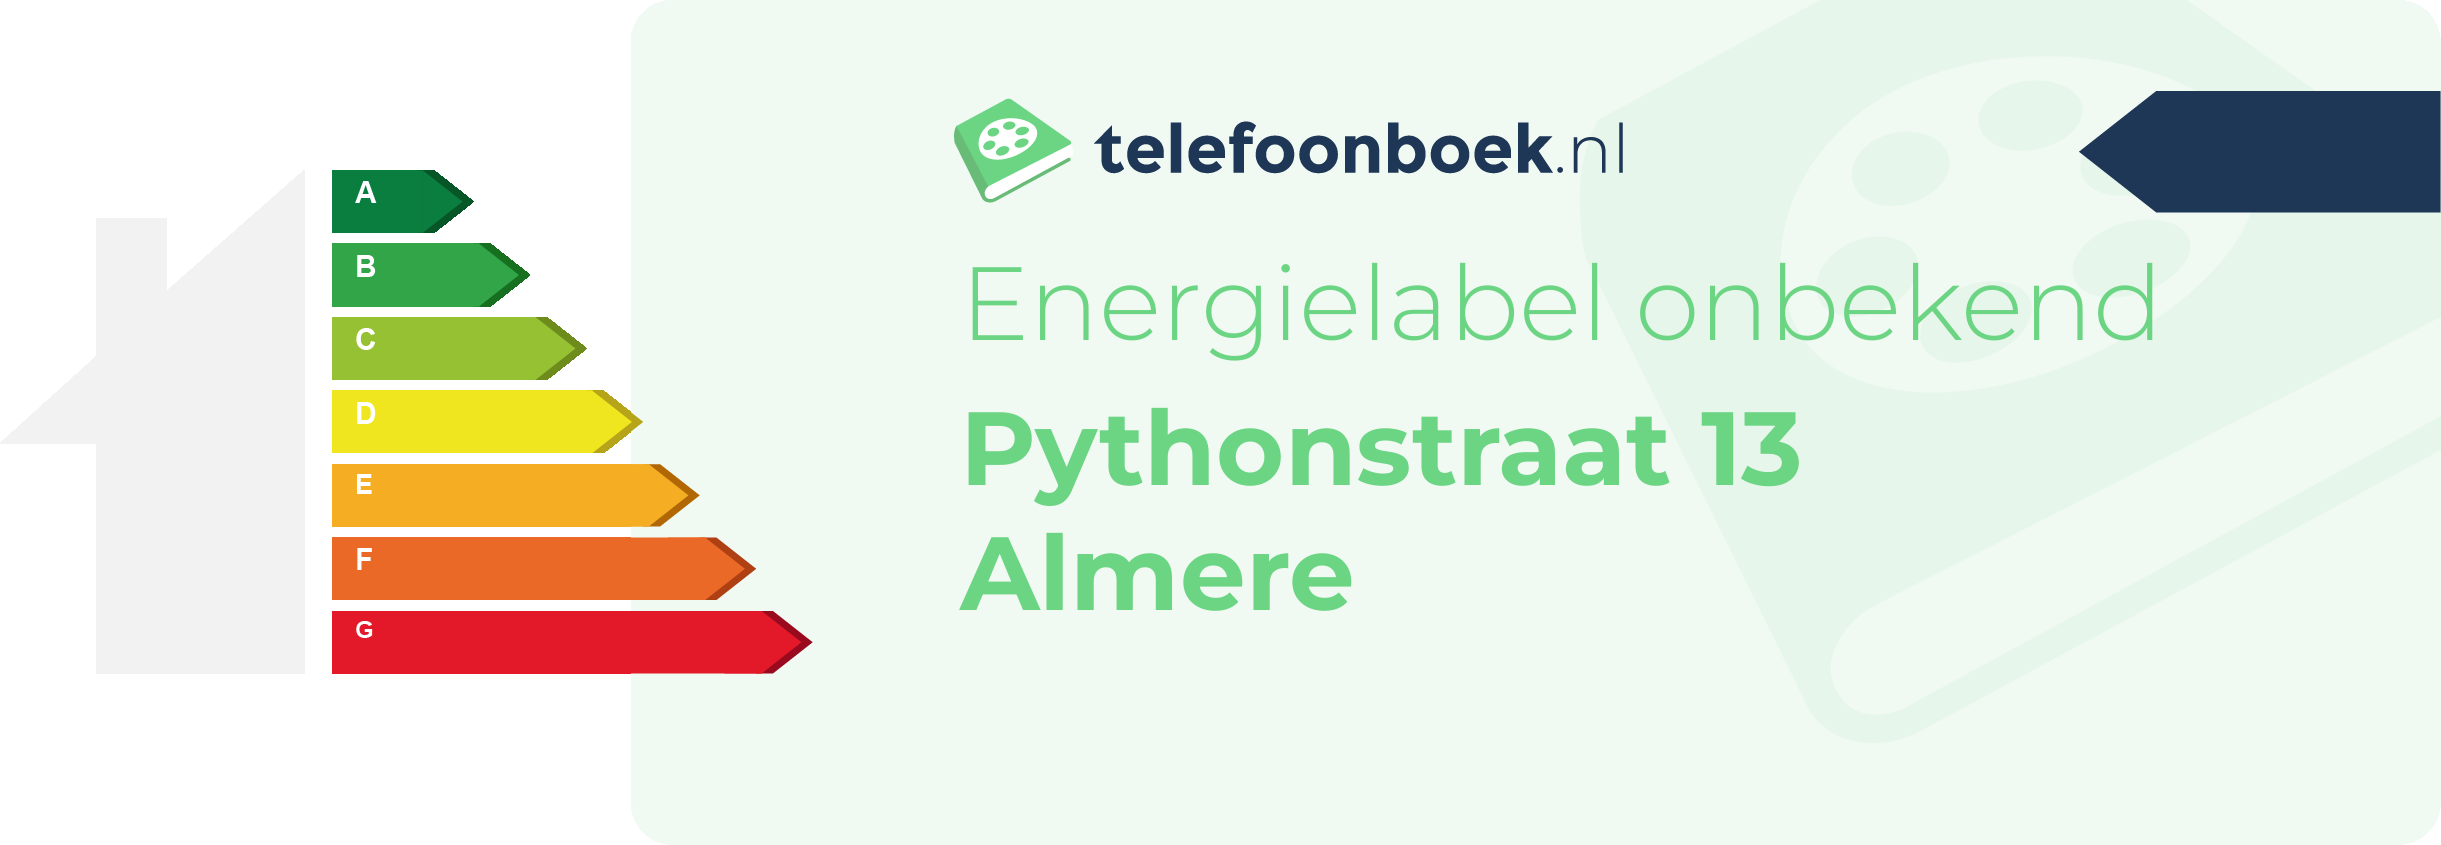 Energielabel Pythonstraat 13 Almere